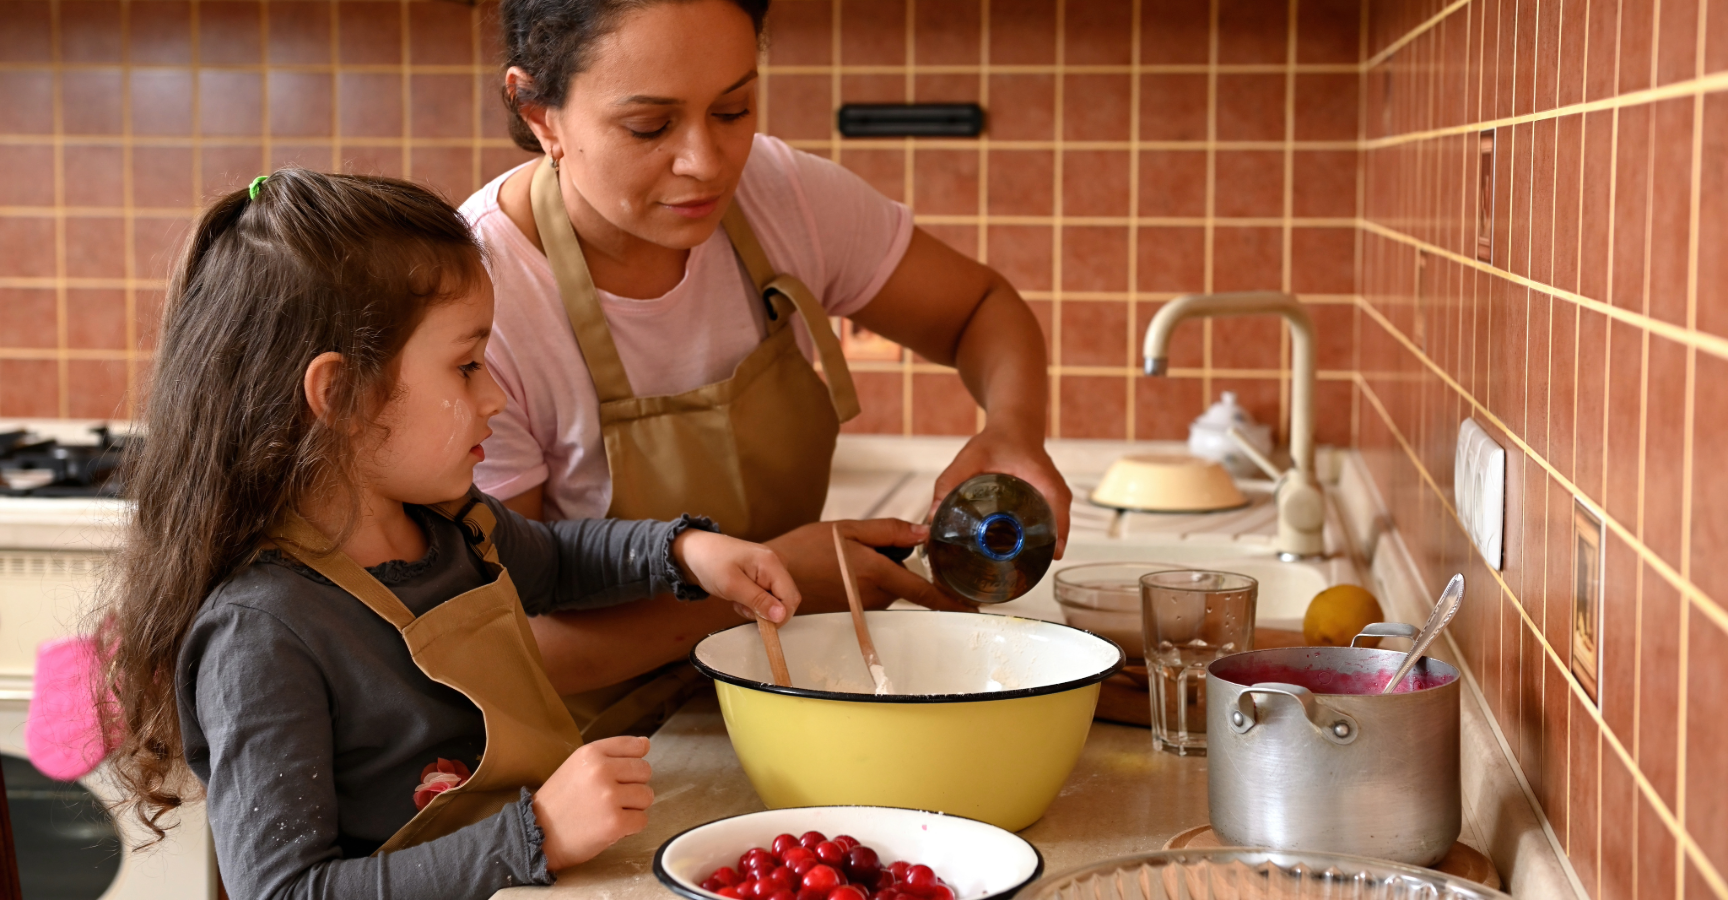 Encouraging kids to eat veggies - Kid cooking with mum in kitchen